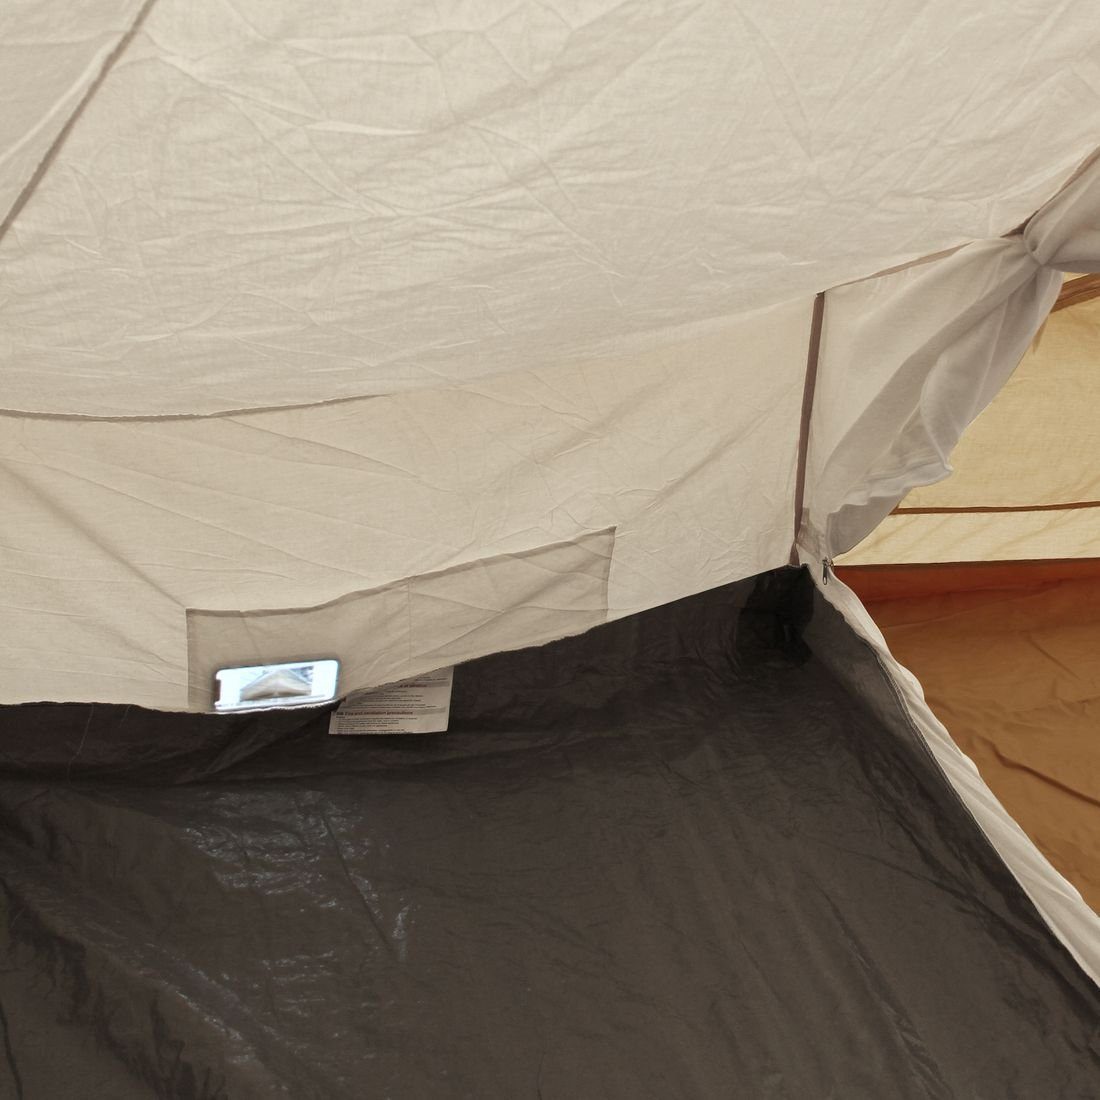 Schlafkabine 8 yourGEAR Desert Pro Zelt Personen, 4 Personen: Innenzelt yourGEAR für 4 Tipi-Zelt für